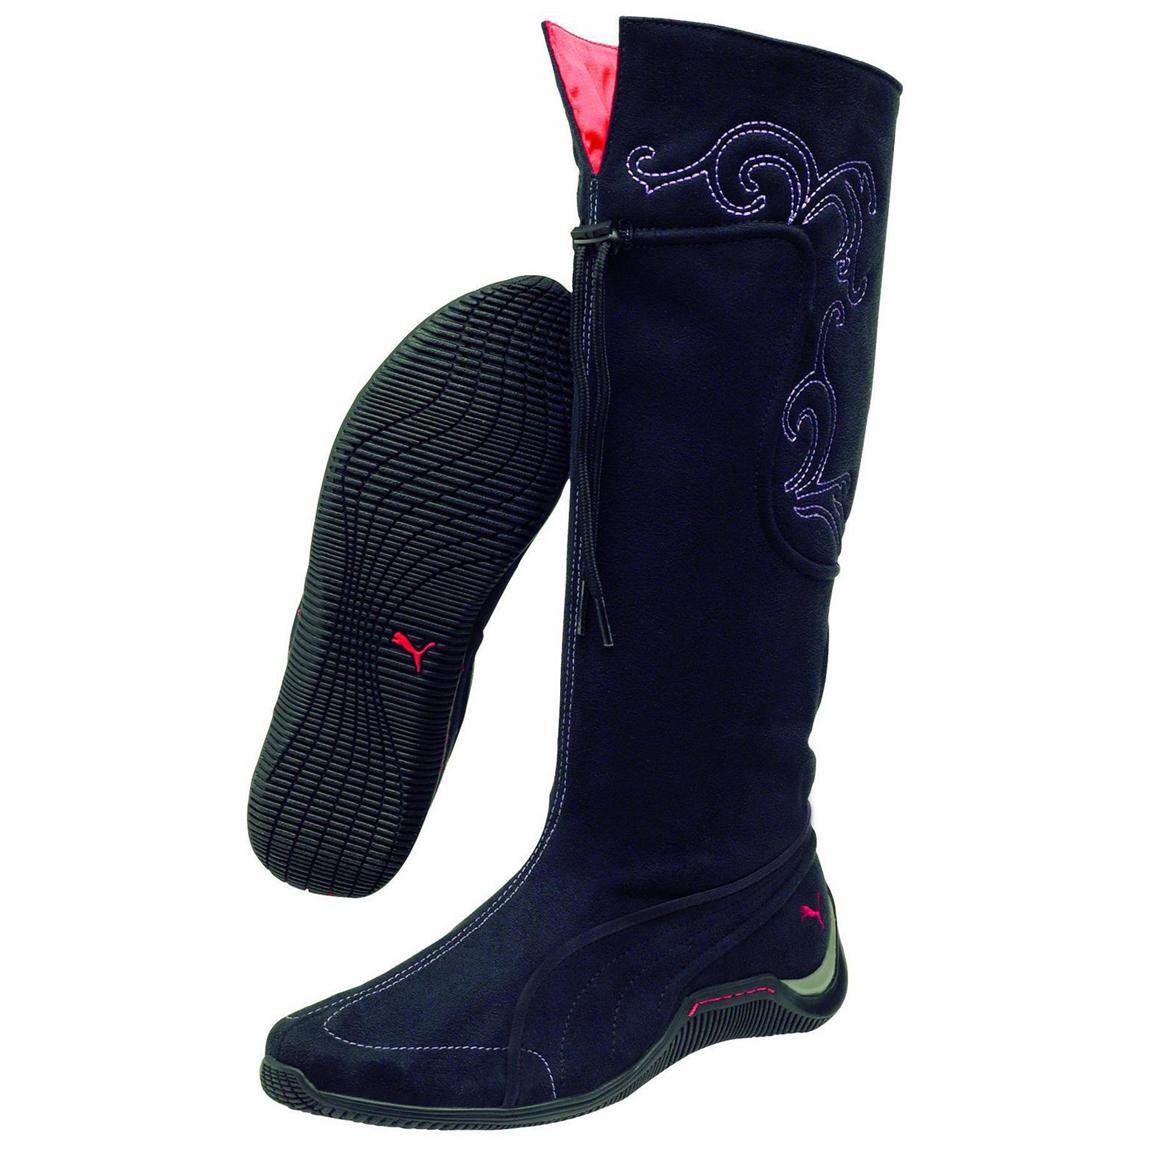 puma women's boots